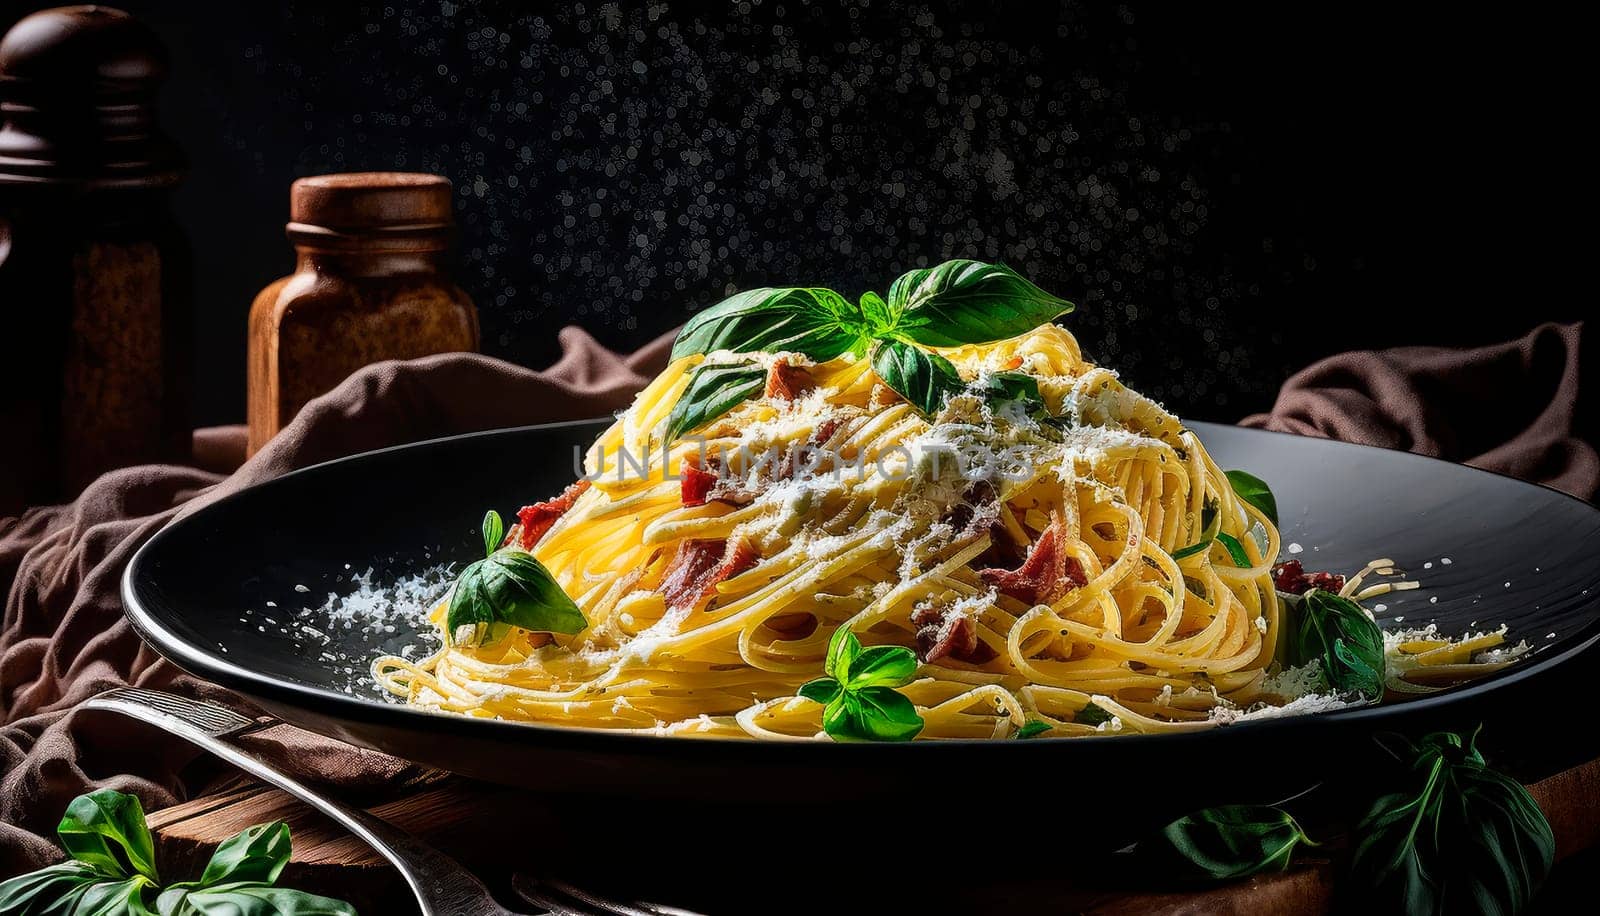 Pasta spaghetti carbonara on a plate on a black background. by yanadjana